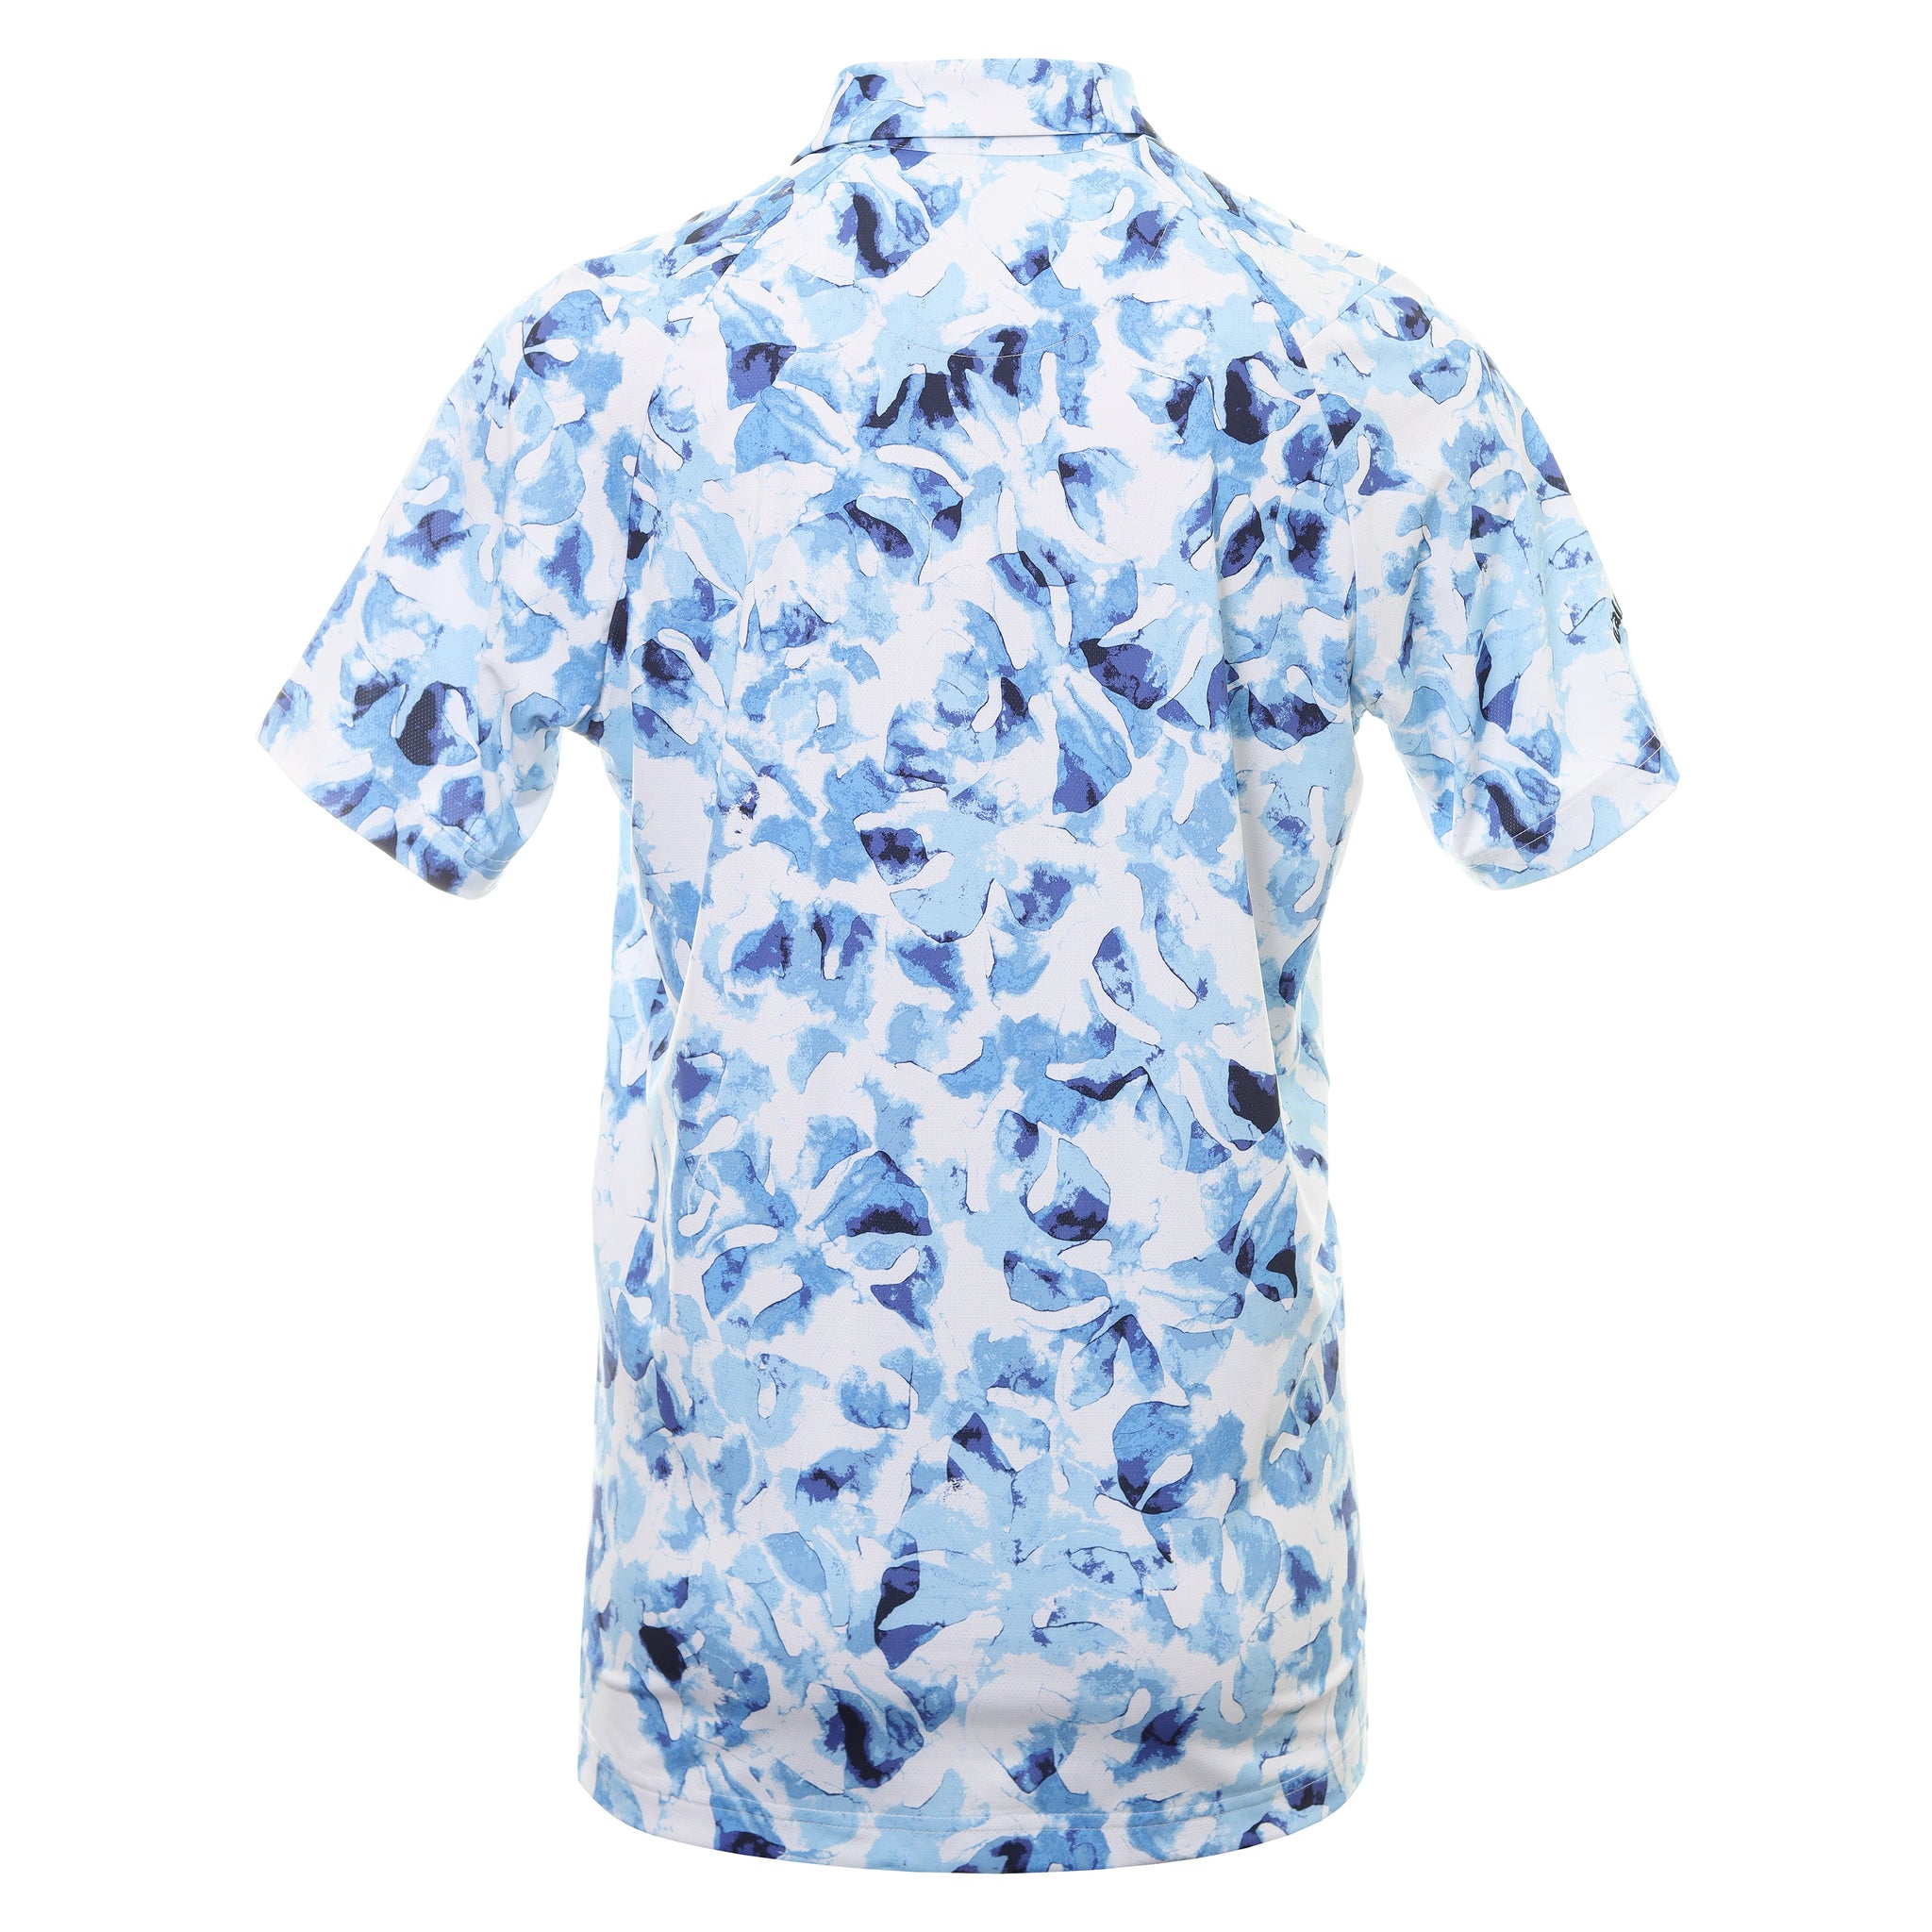 callaway-golf-tye-dye-leaf-print-shirt-cgksc0c0-bright-white-100